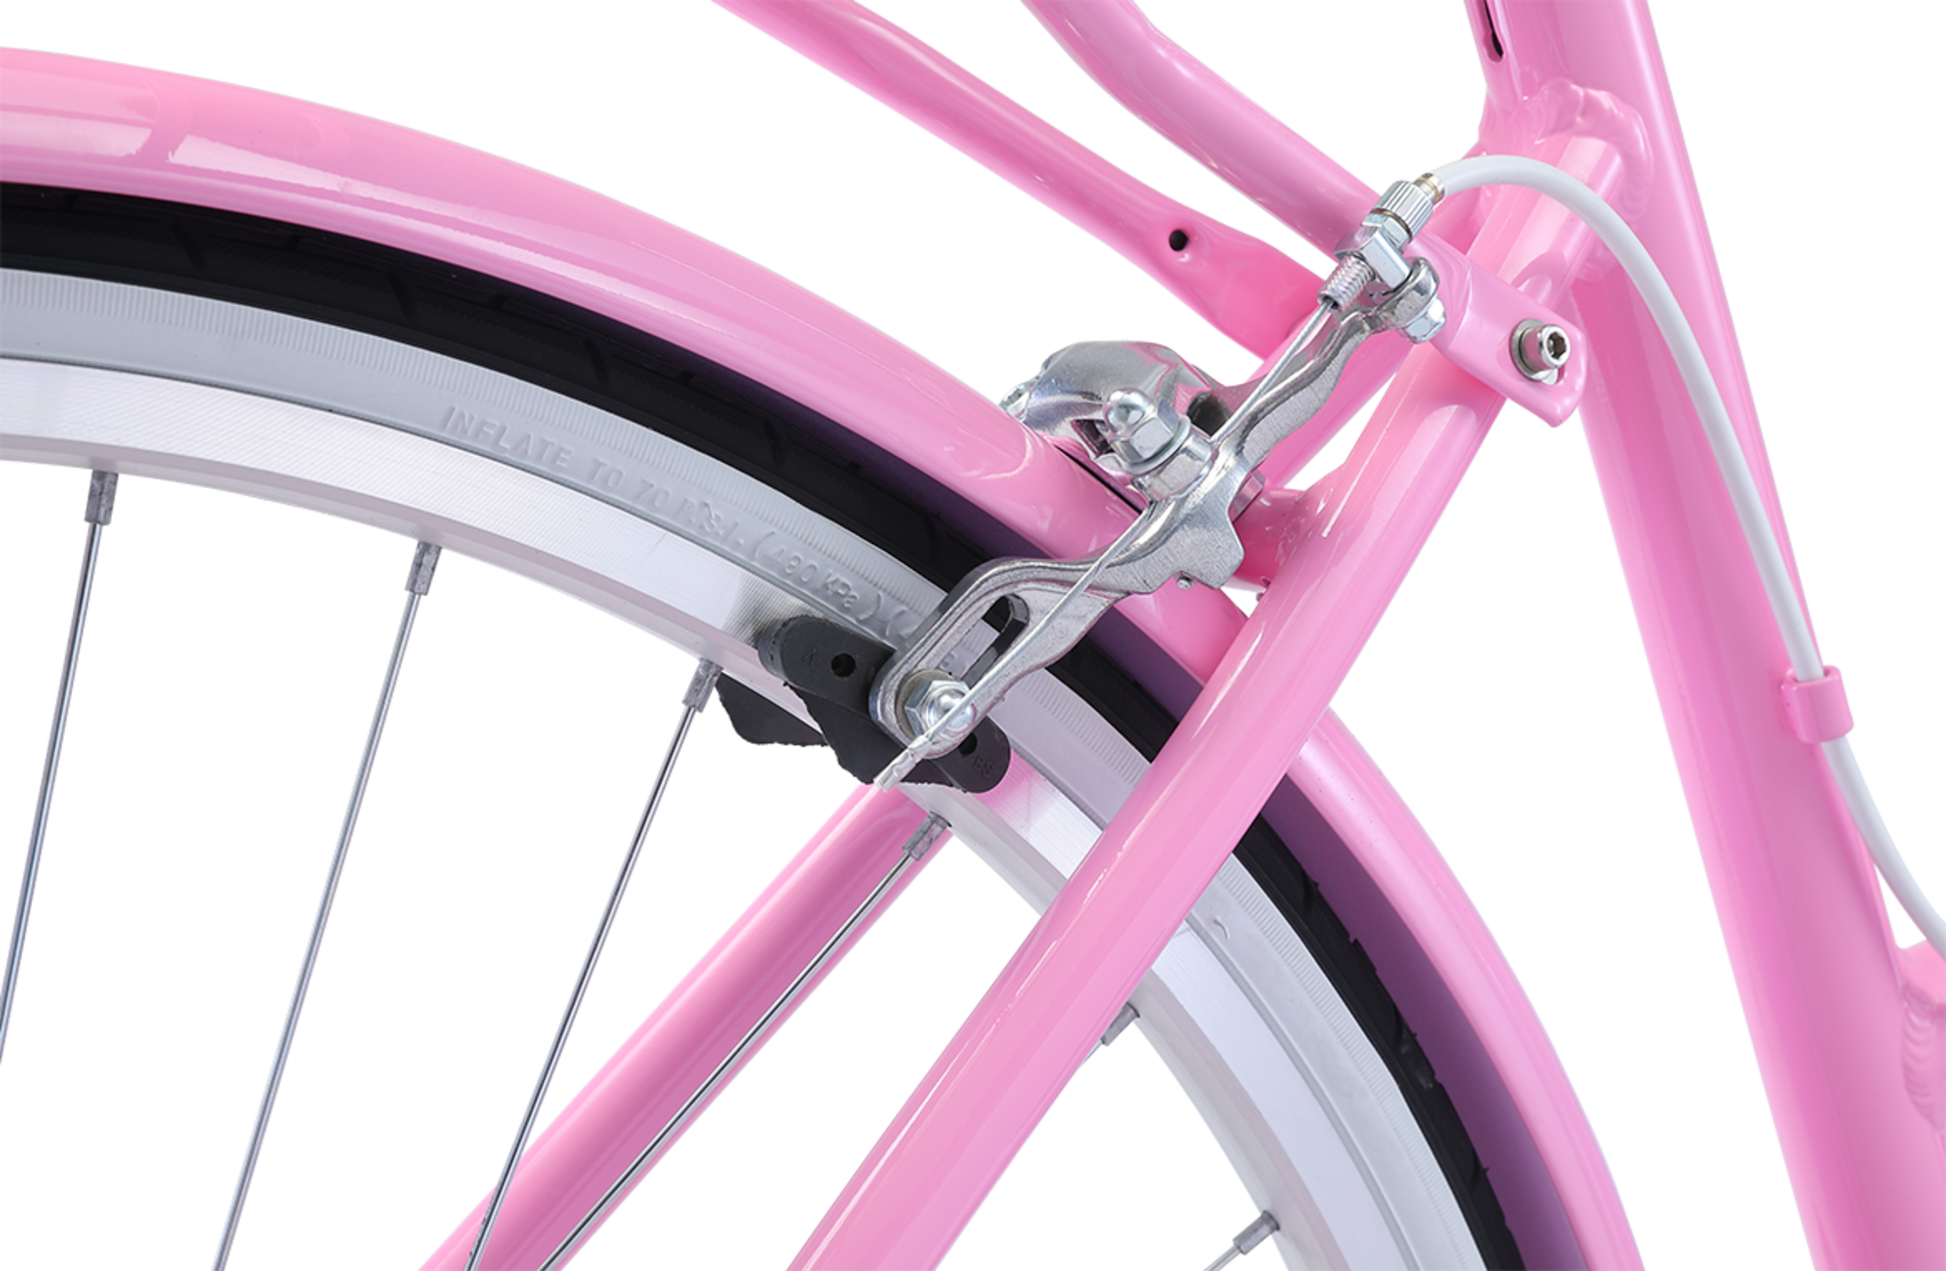 Ladies Classic Plus Vintage Bike in Pink front Dual-Pivot Caliper Brake from Reid Cycles Australia